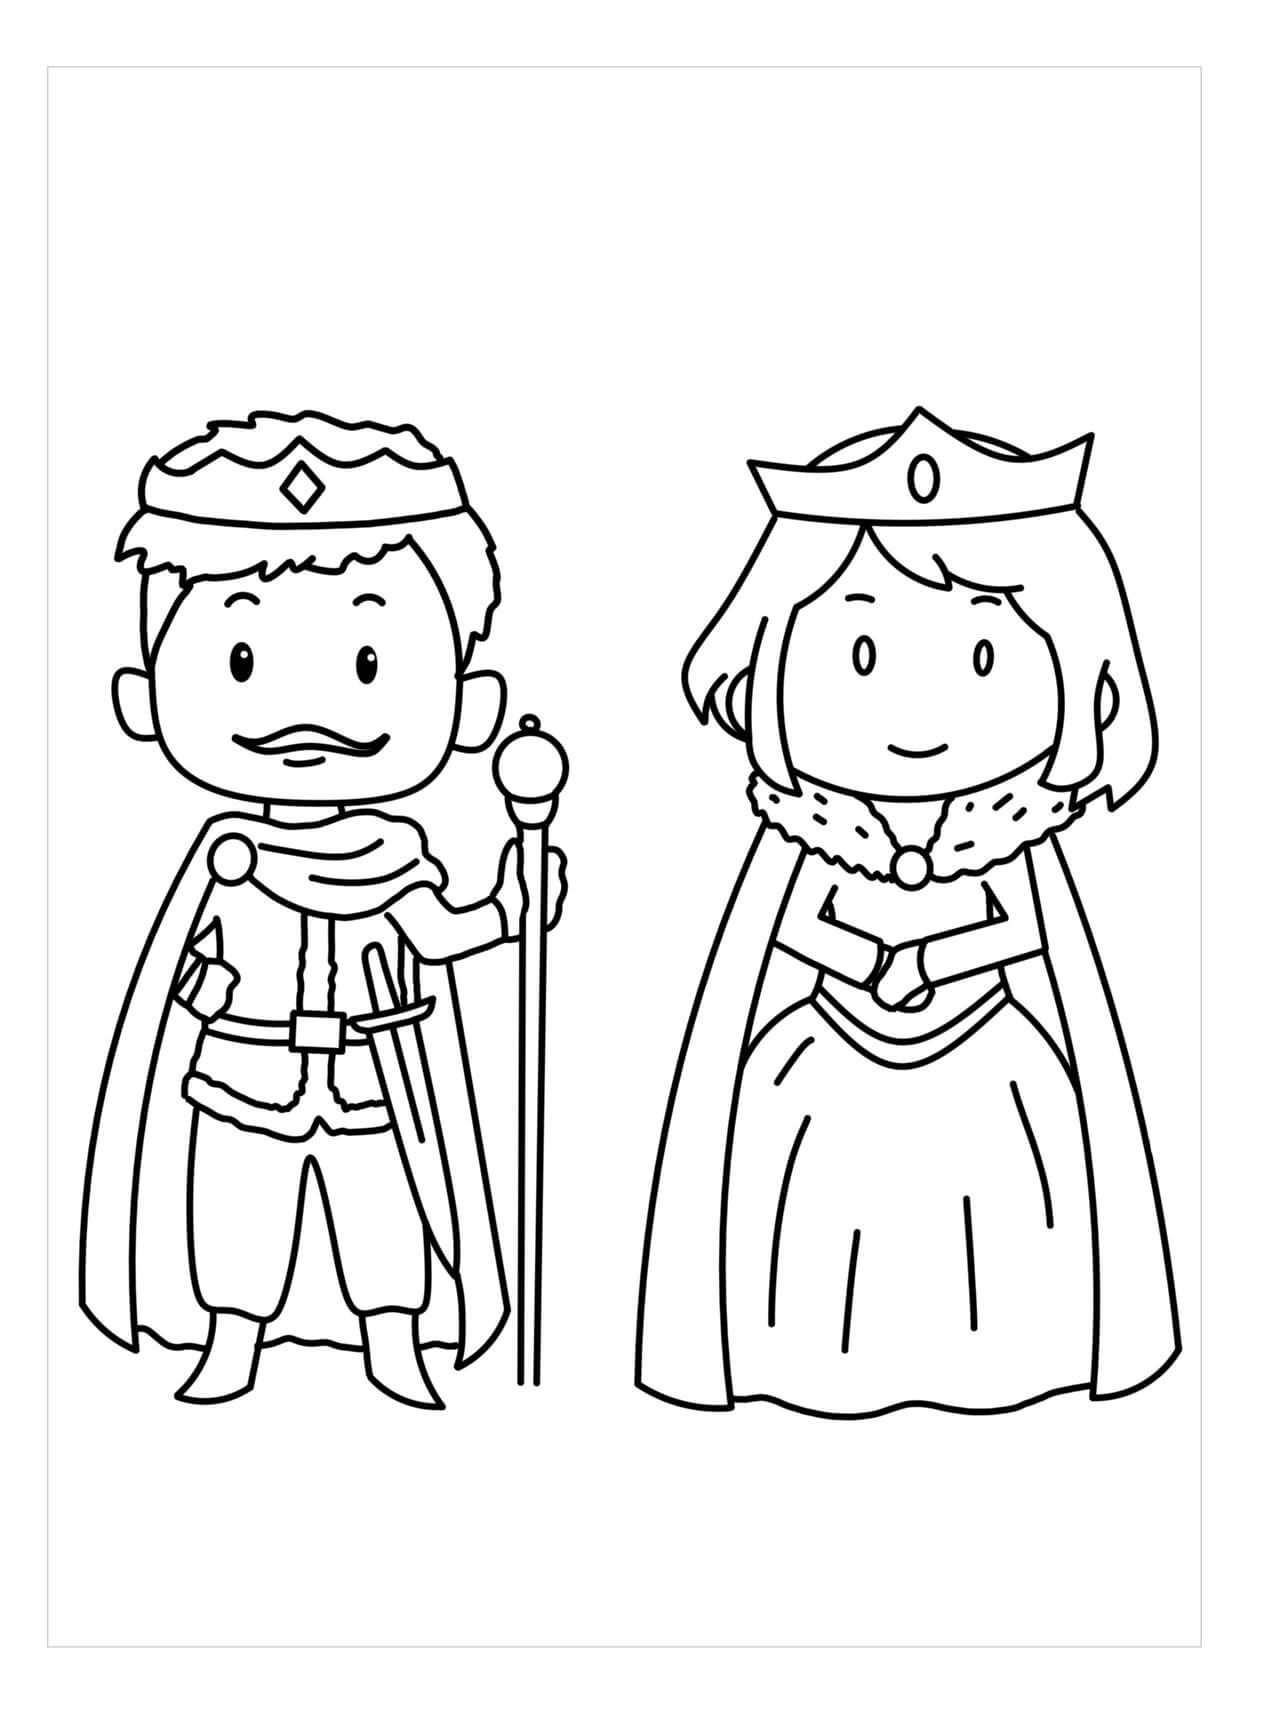 Rei e Rainha Sorridente para colorir